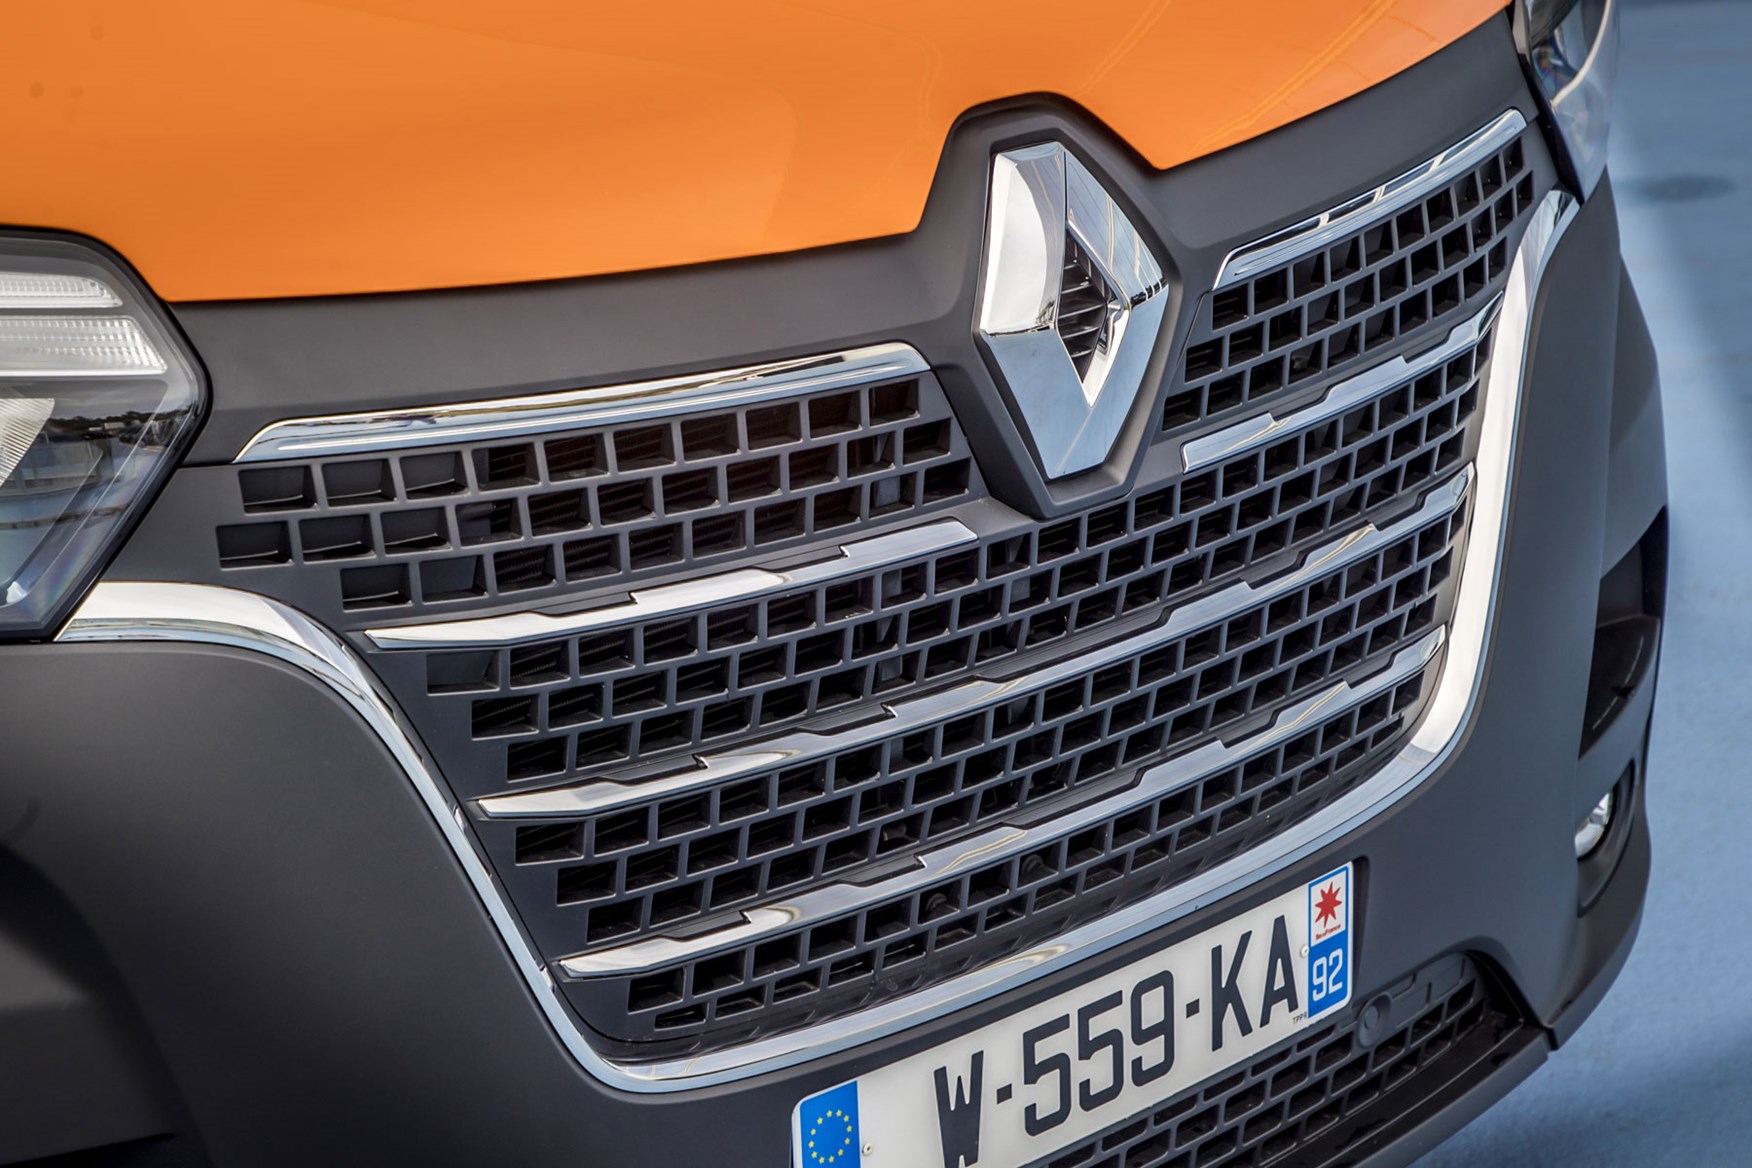 Renault Master review - 2019 facelift, new front grille and bonnet detail, orange